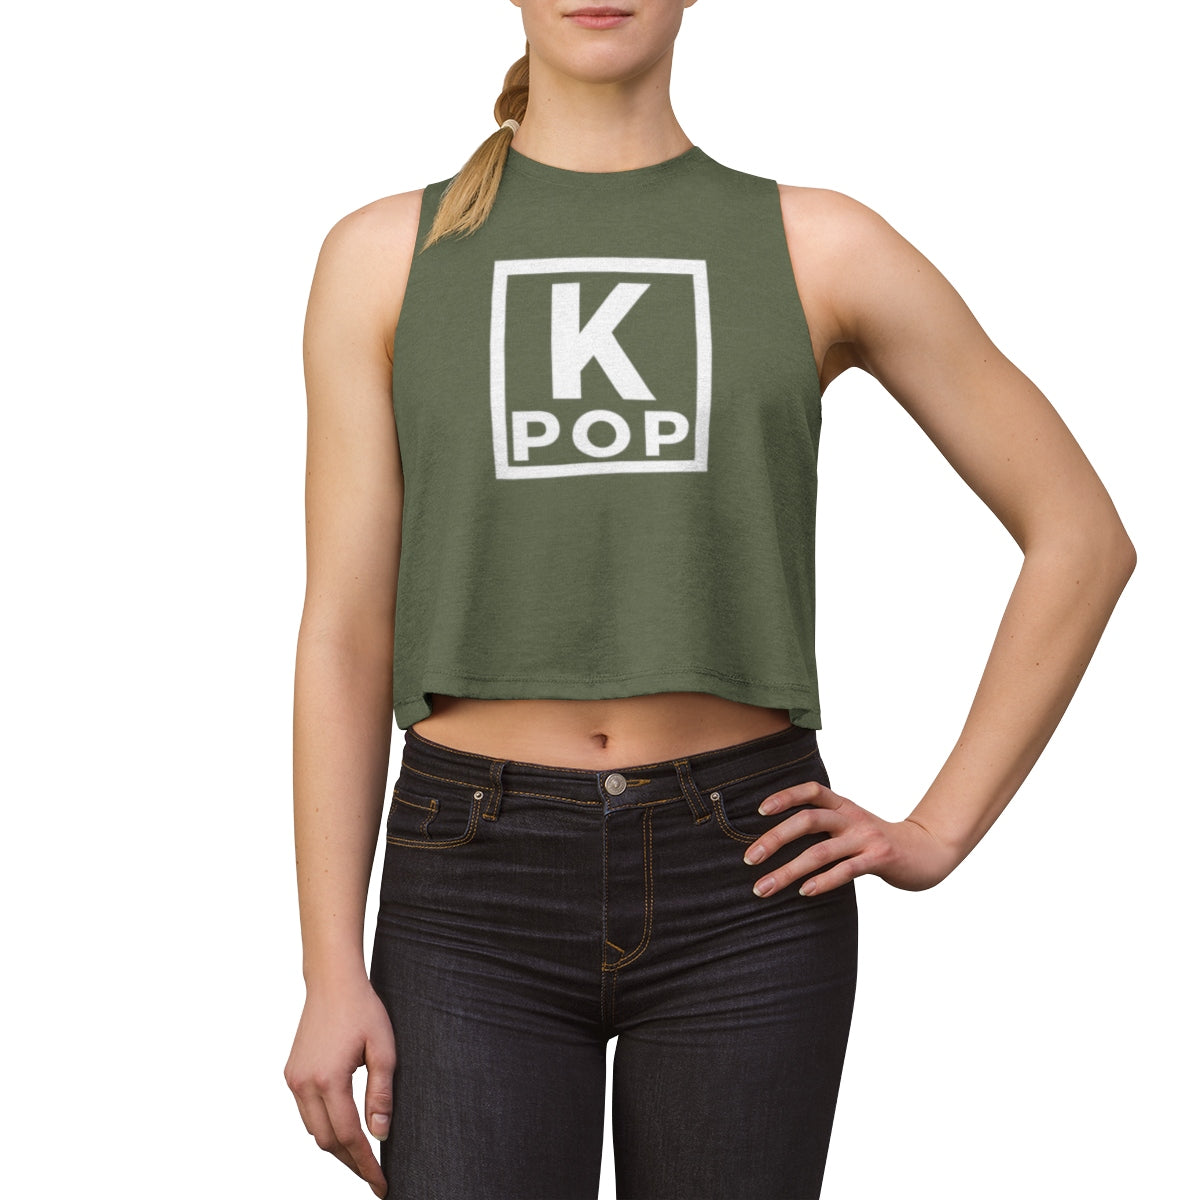 Kpop Crop top - SD-style-shop